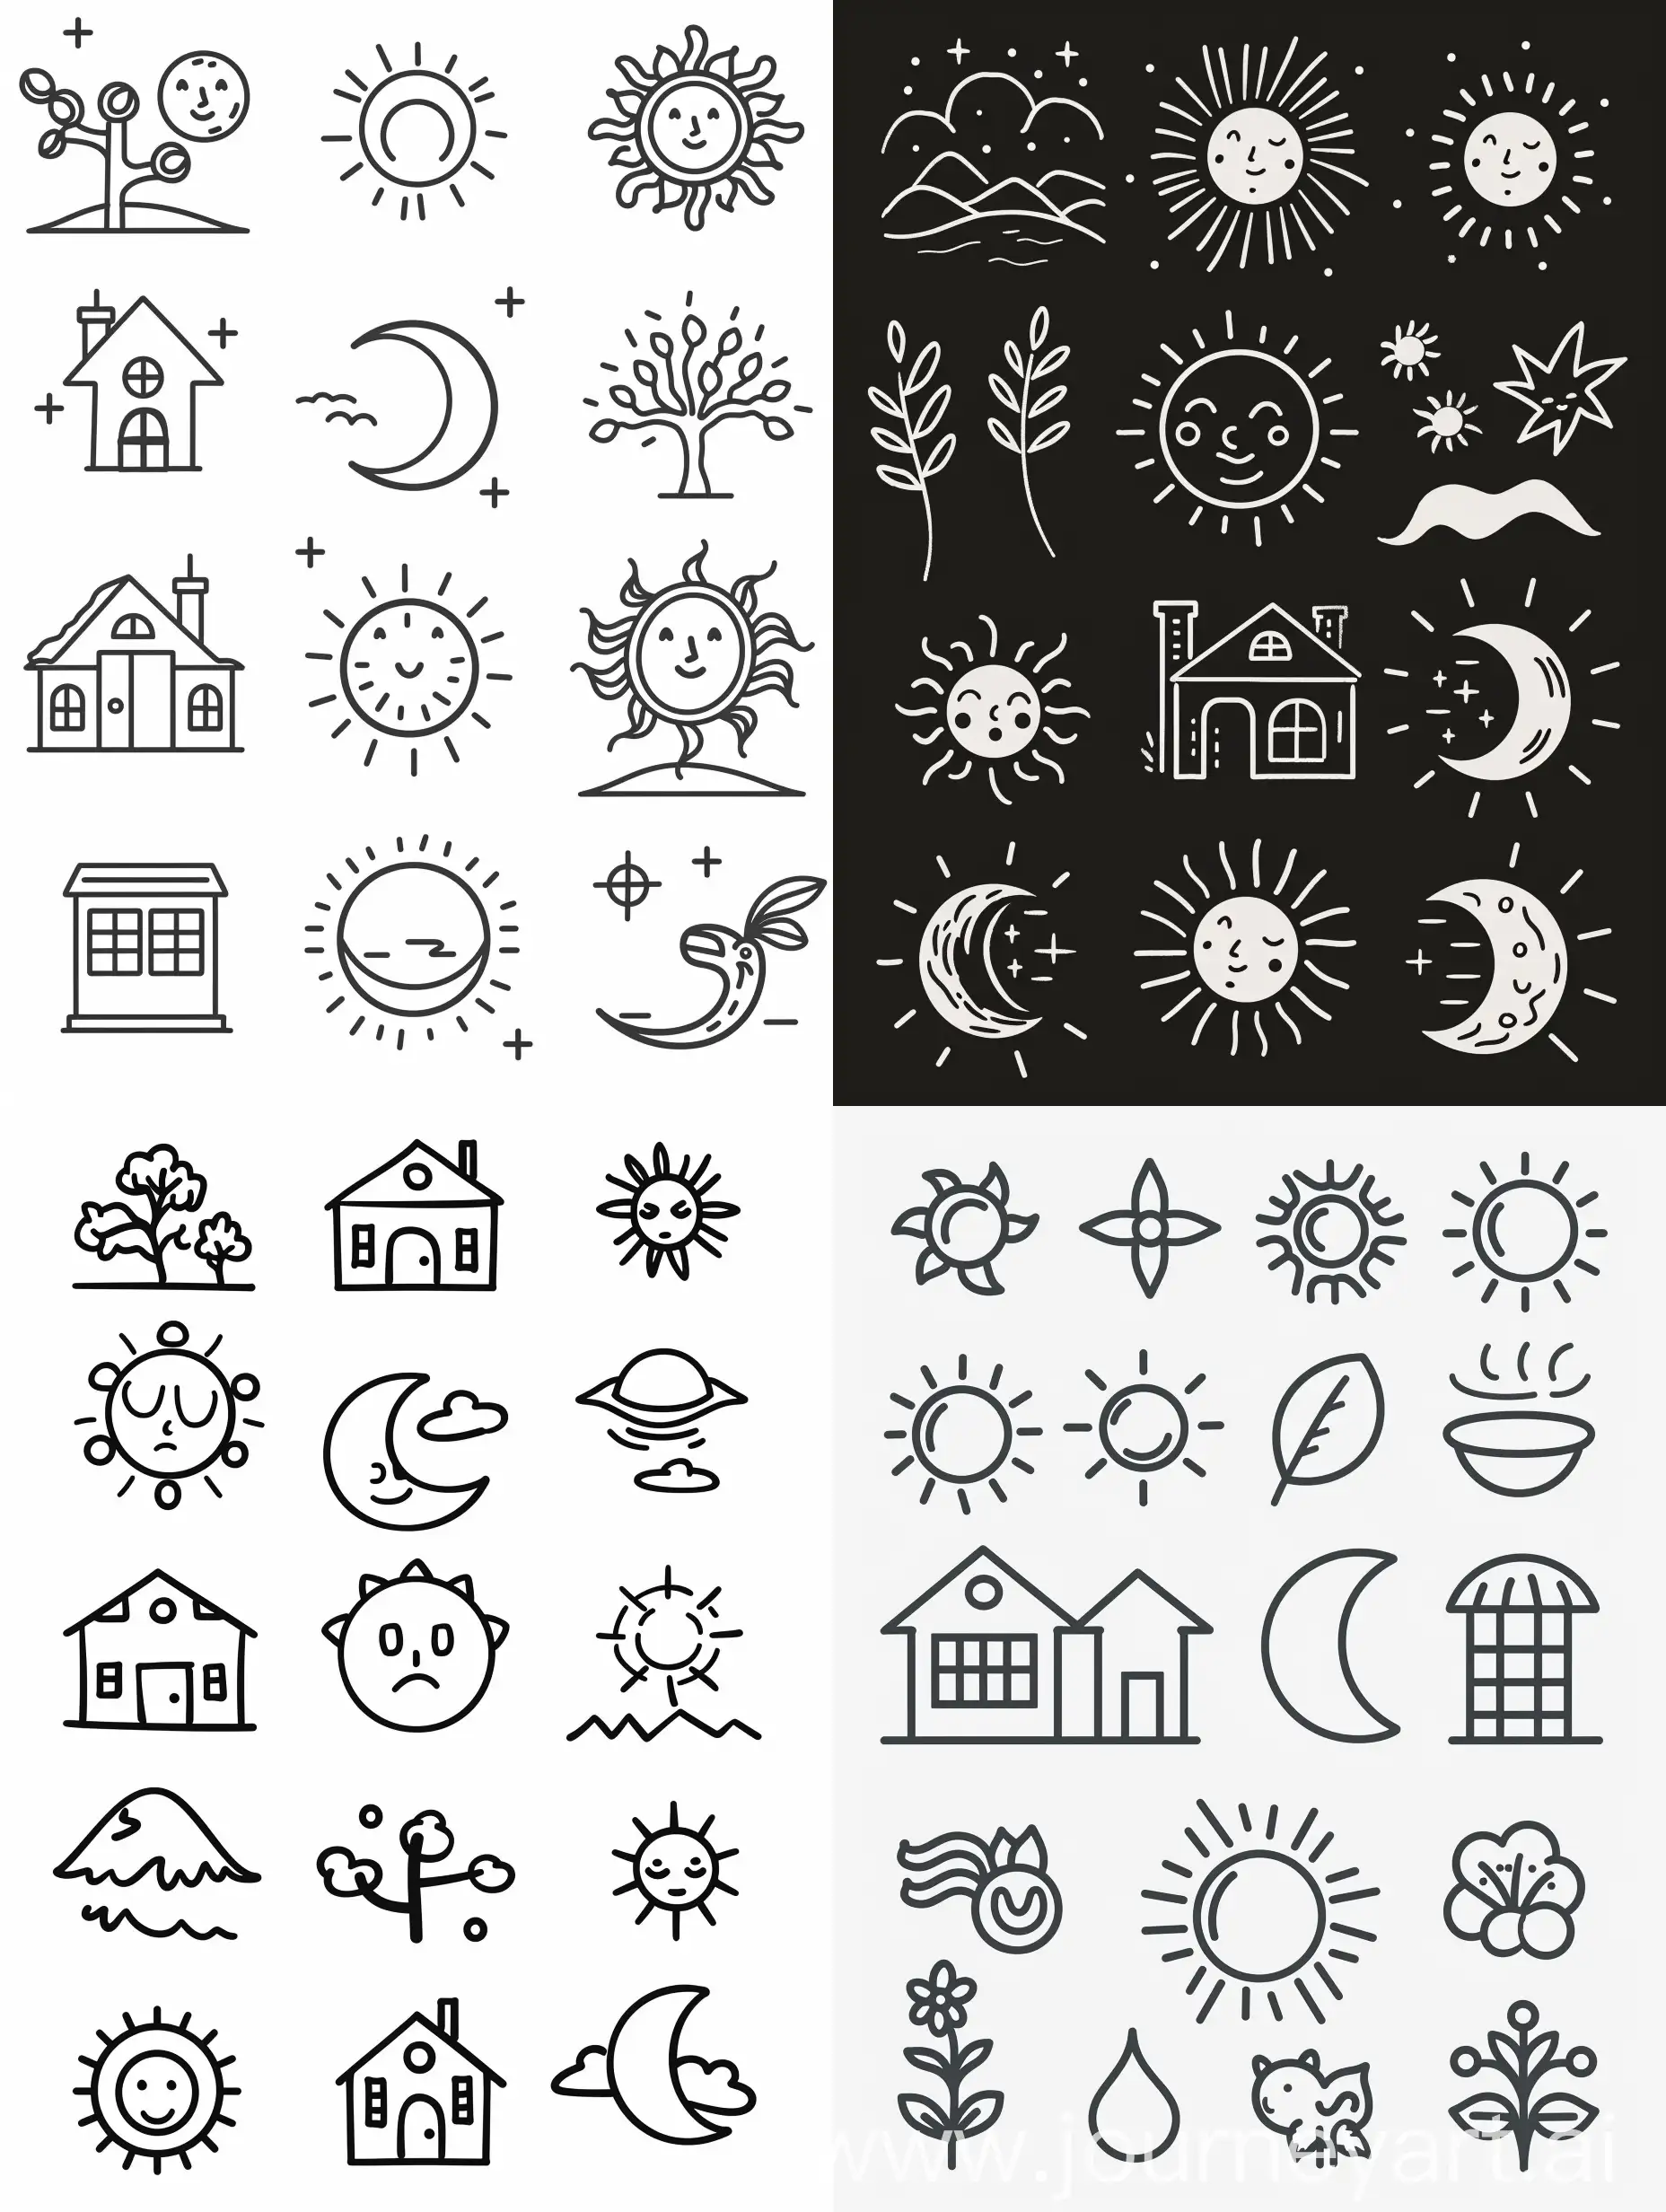 
Набор иконок, рисунок от руки, тонкая линия, контур, природа, уют, дом, солнце и луна